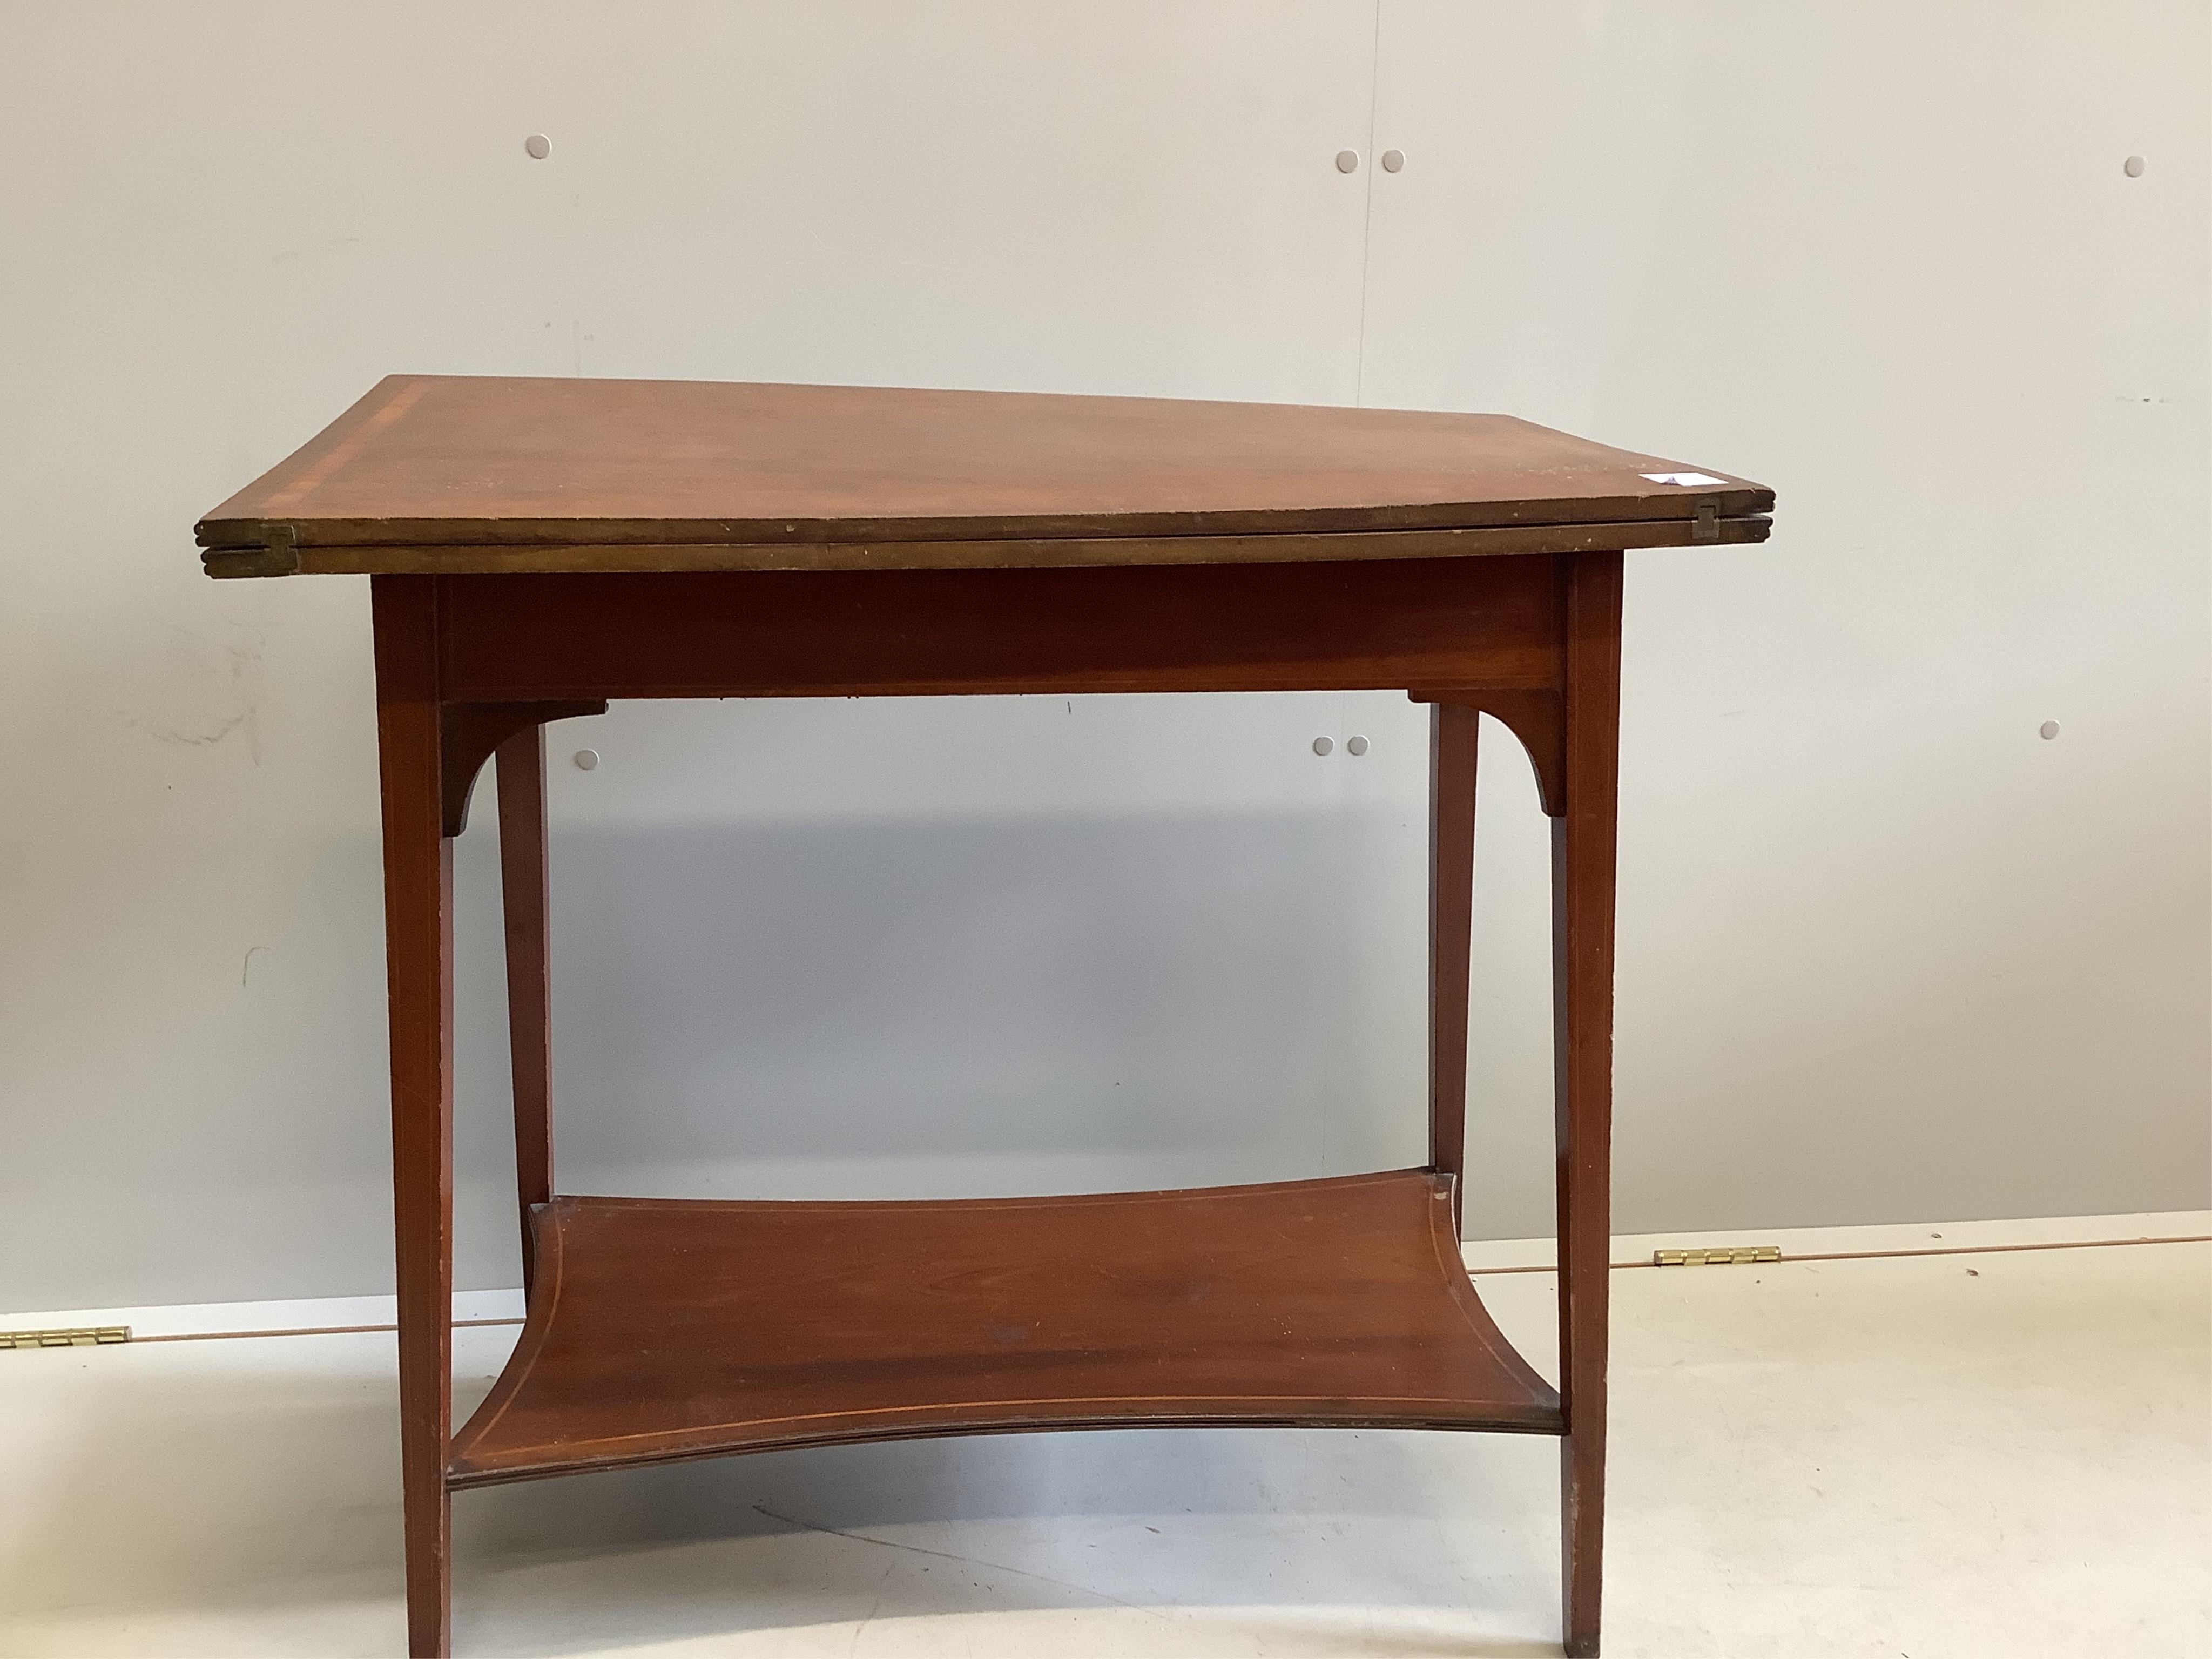 An Edwardian satinwood banded mahogany rectangular folding tea table, width 75cm, depth 42cm, height 73cm. Condition - fair